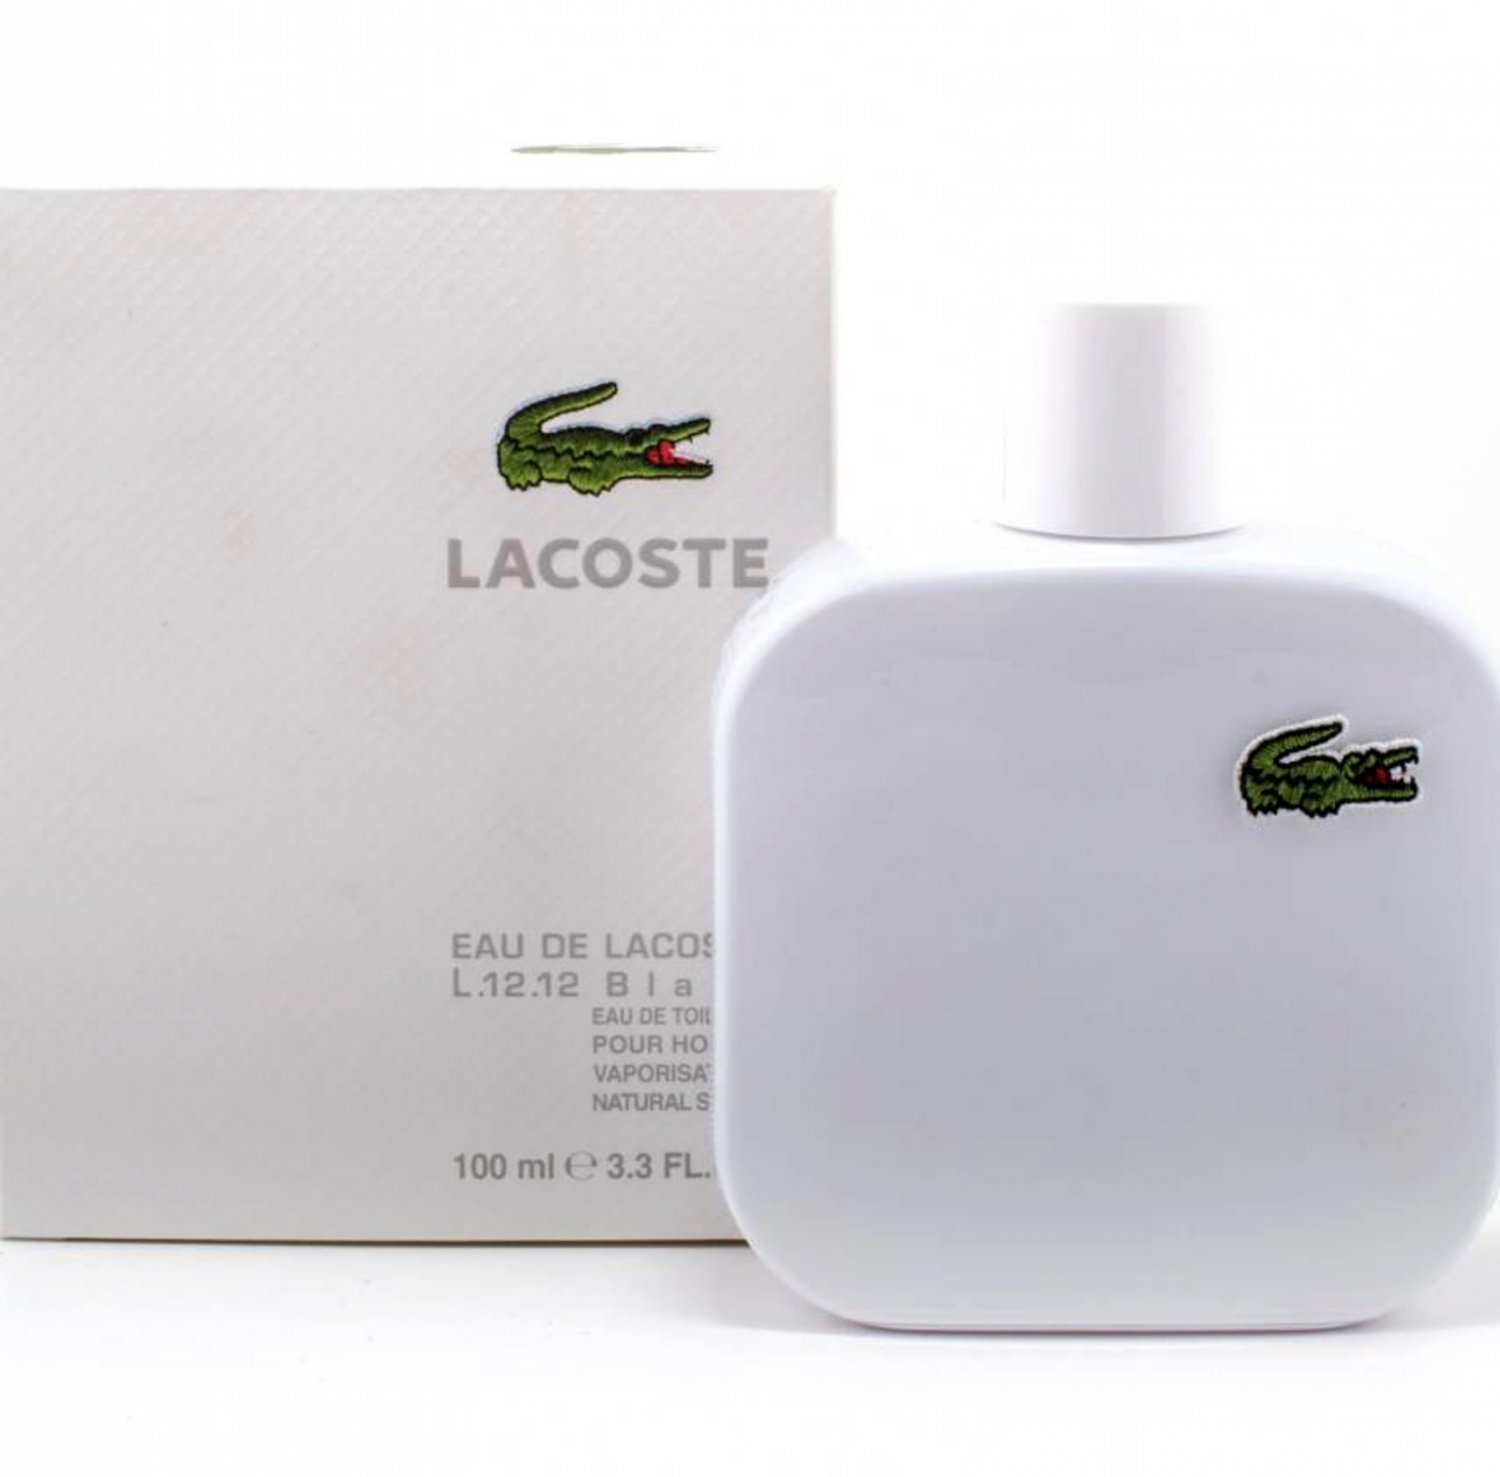 Дона лакоста. Lacoste l.12.12 Blanc. Lacoste Blanc Pure мужской 15. Модели лакоста. Туалетная вода Lacoste рекламное изображение.